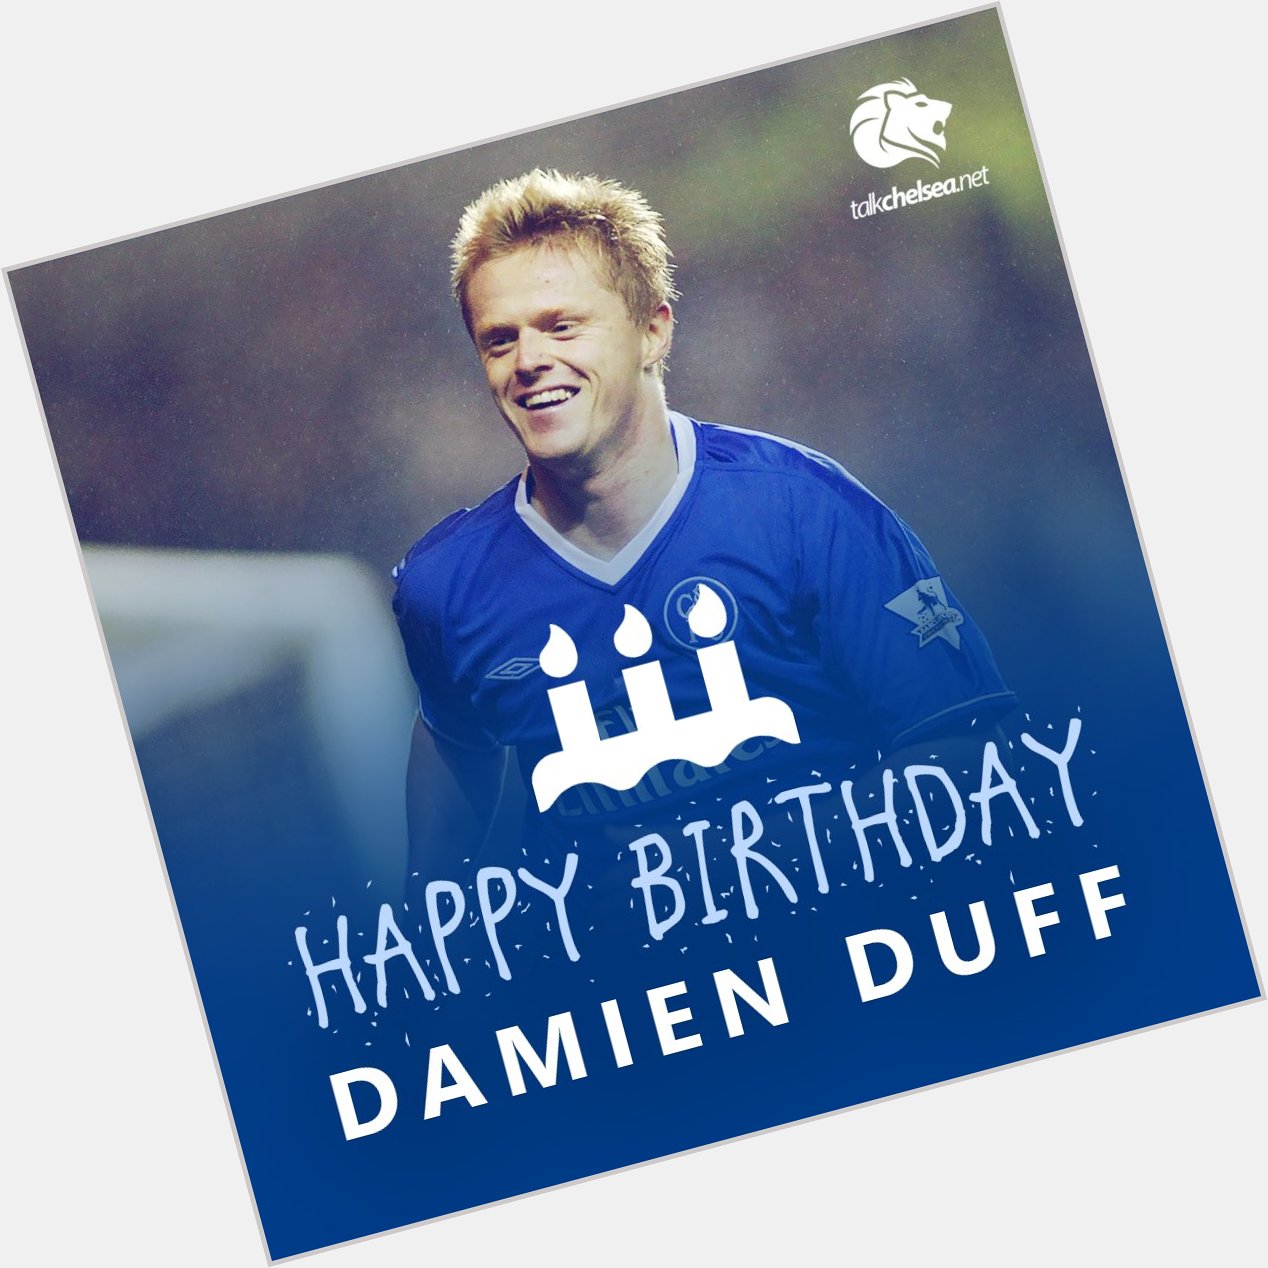 Wishing a very happy birthday to former Blue Damien Duff! 